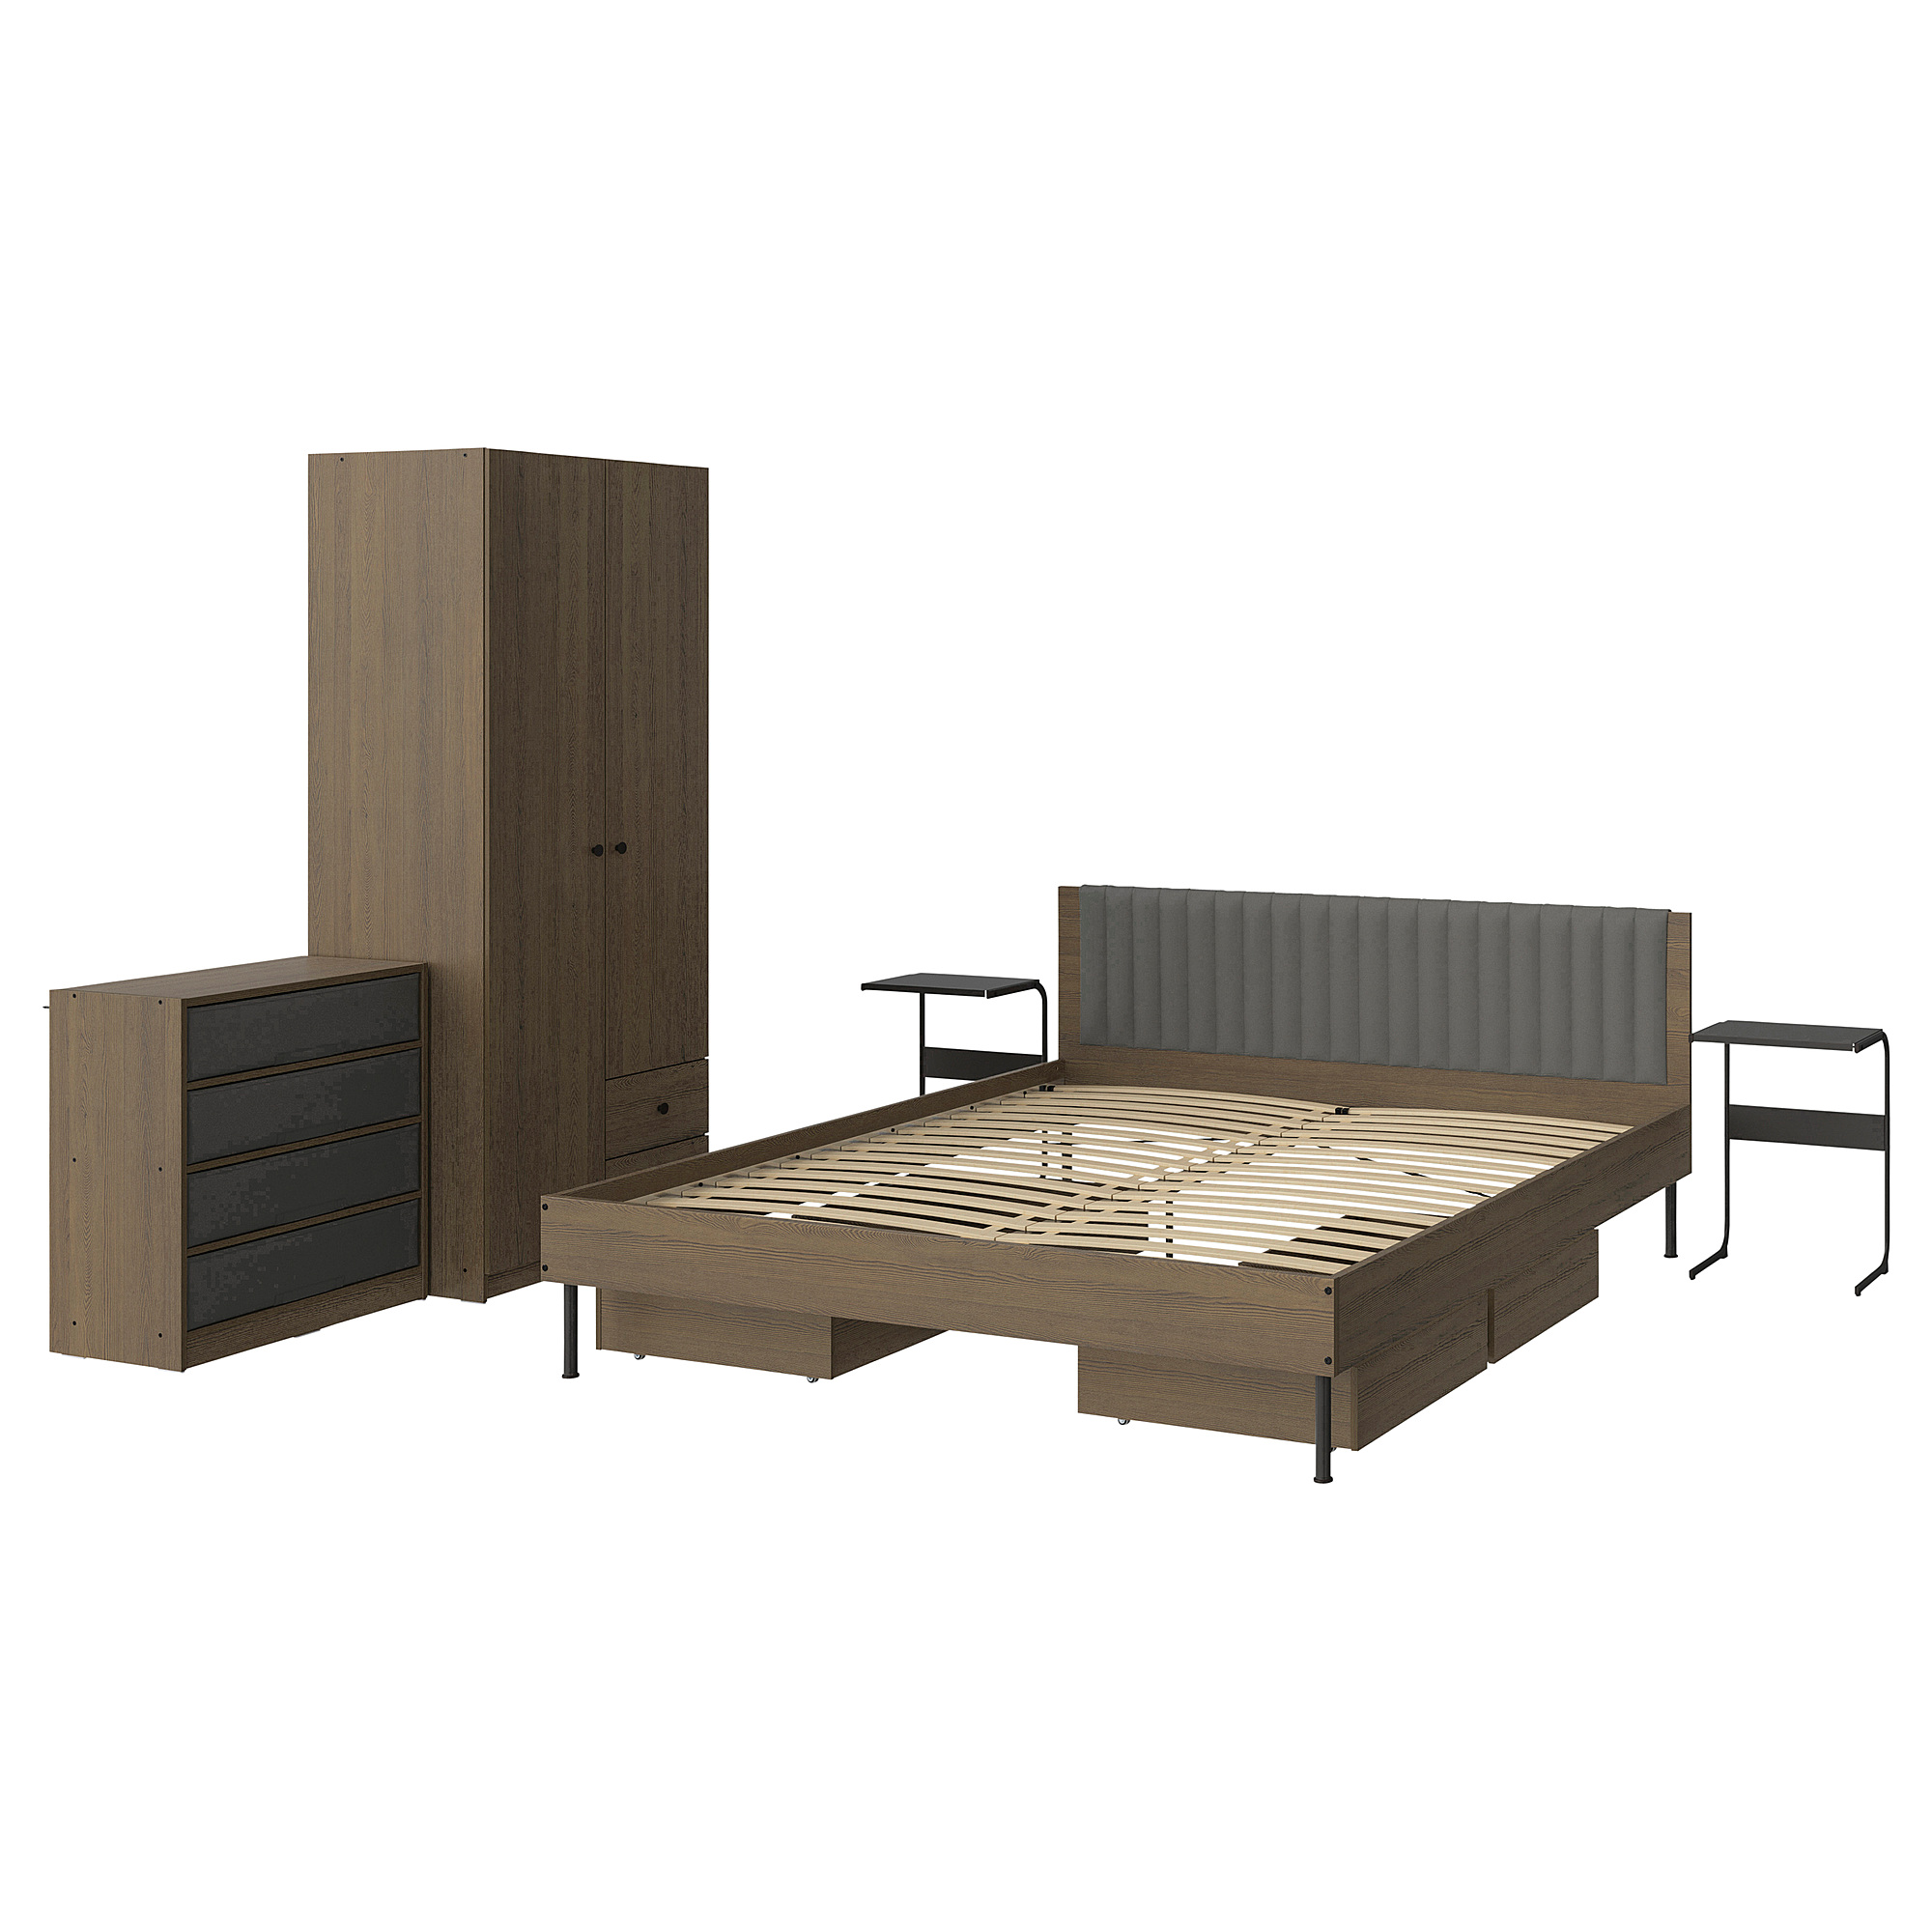 BRUKSVARA bedroom furniture, set of 9